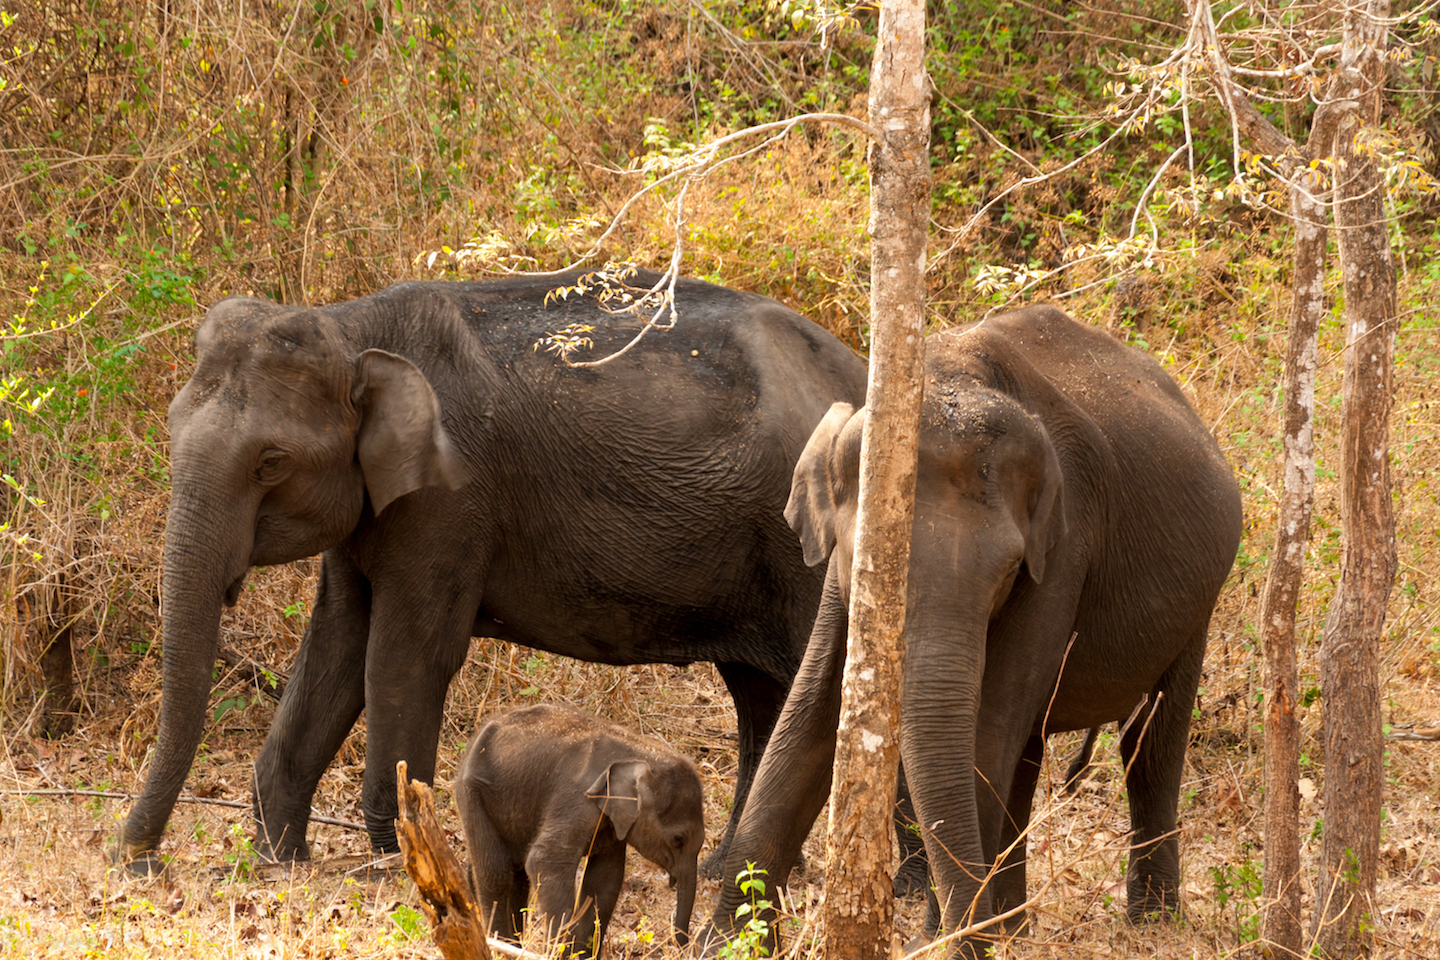 Female elephants and a calf